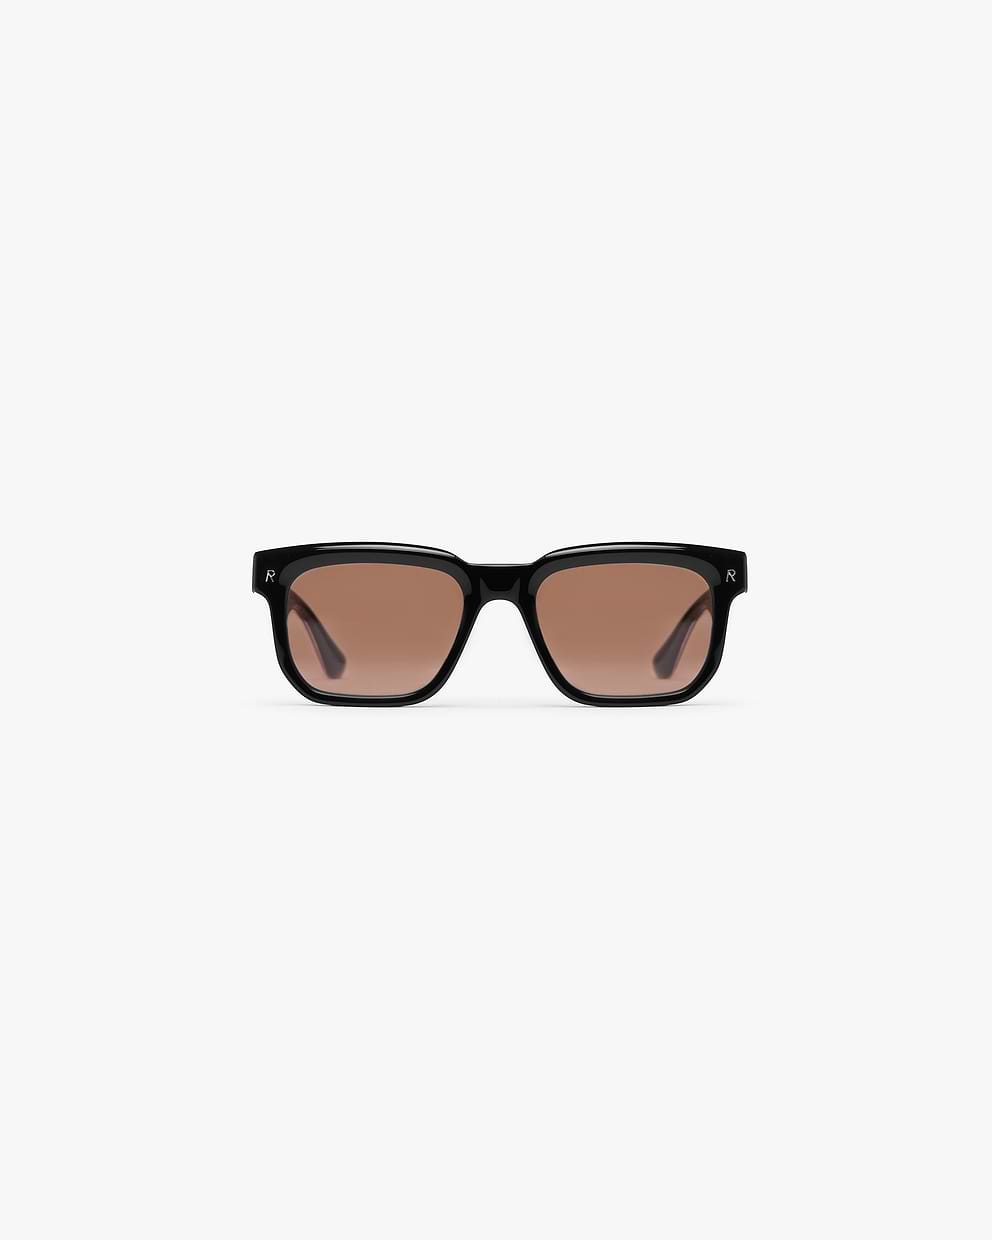 Represent Hamptons Sunglasses - Jet Black